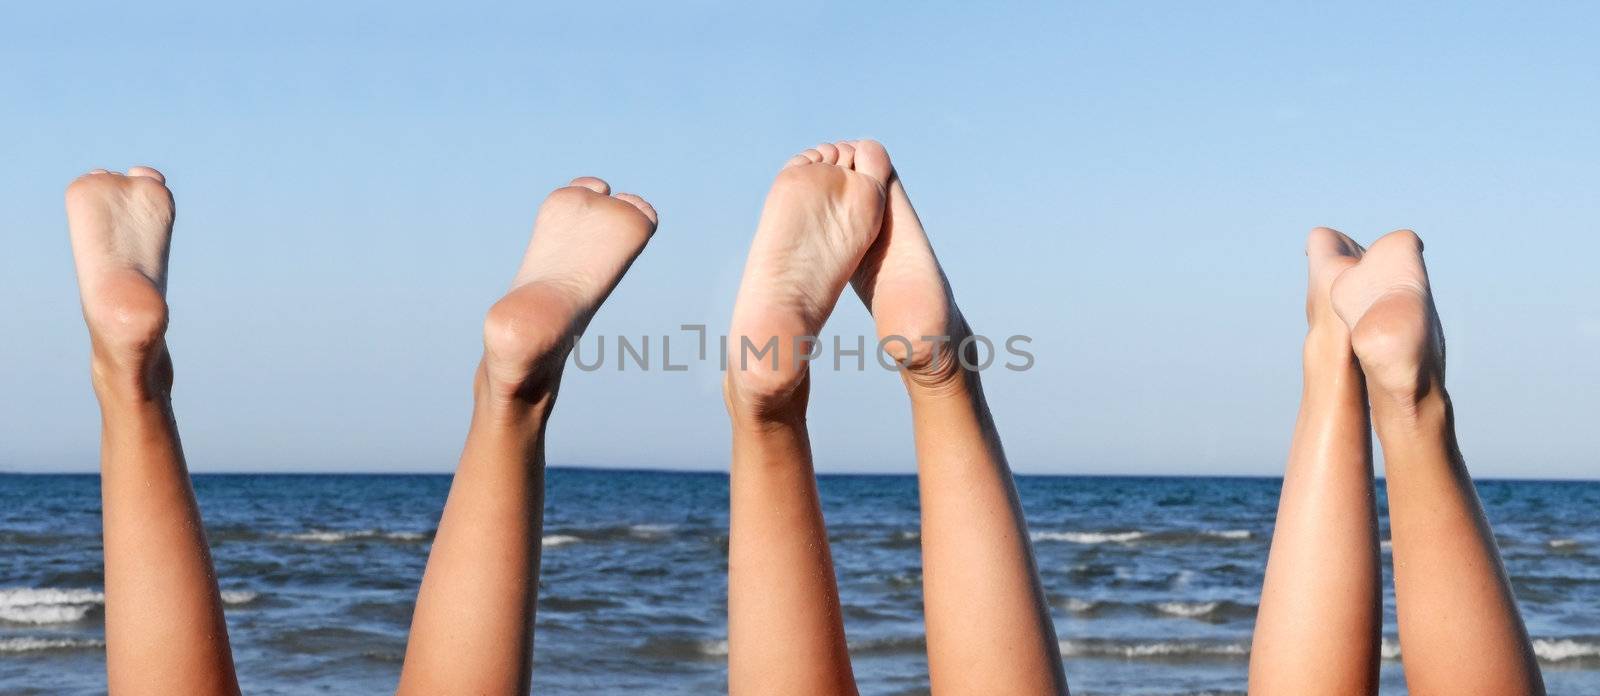 lovely legs on the beach by jordano